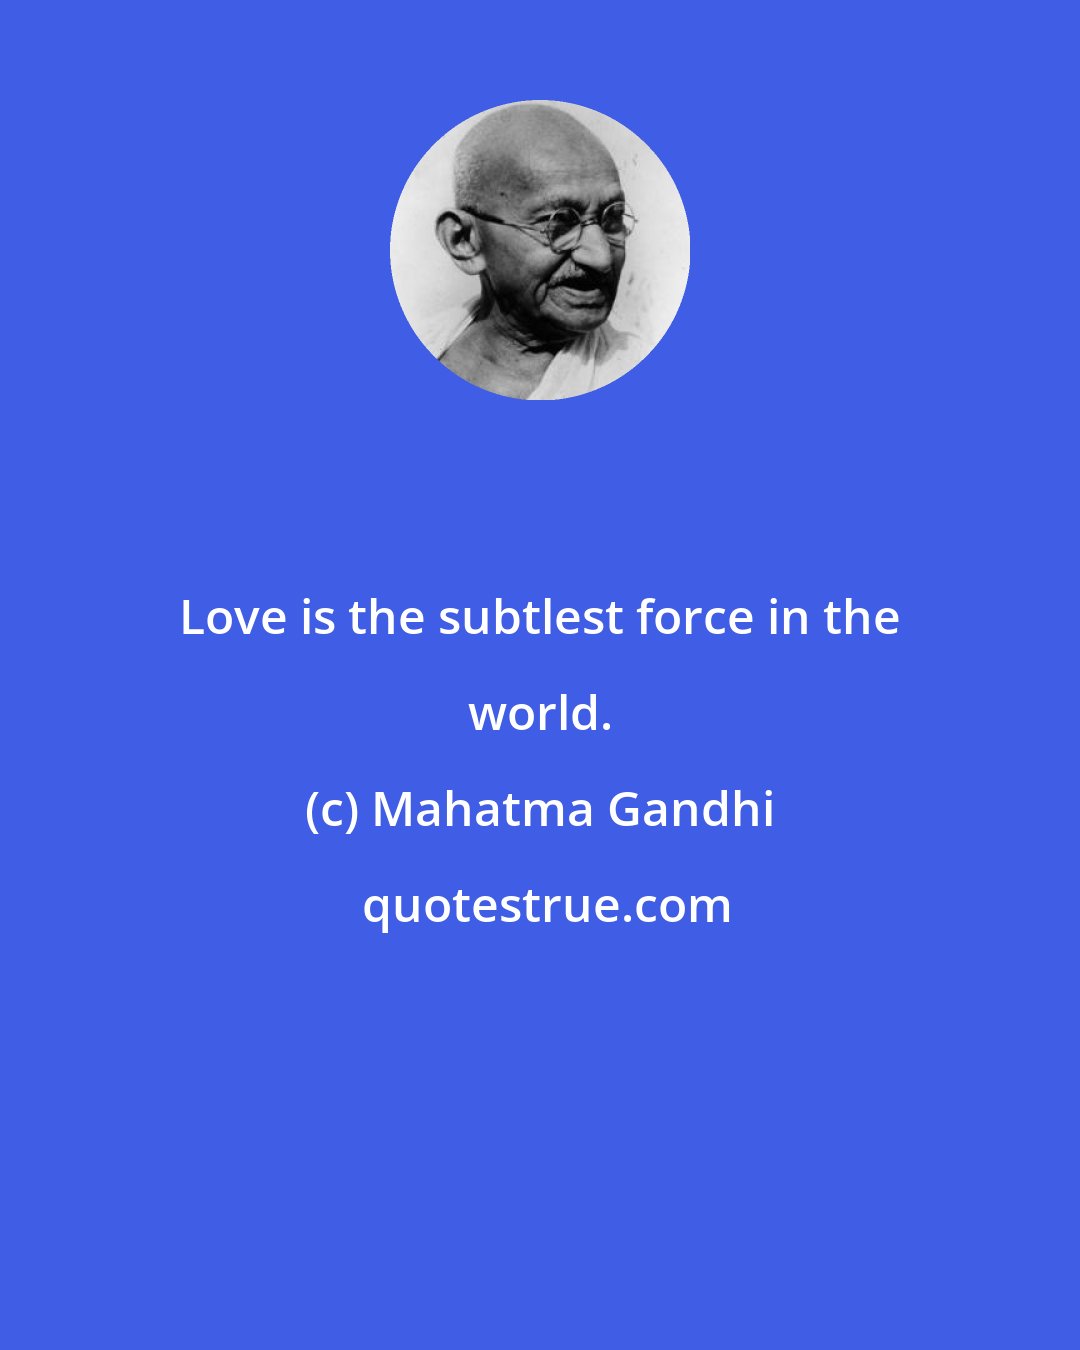 Mahatma Gandhi: Love is the subtlest force in the world.